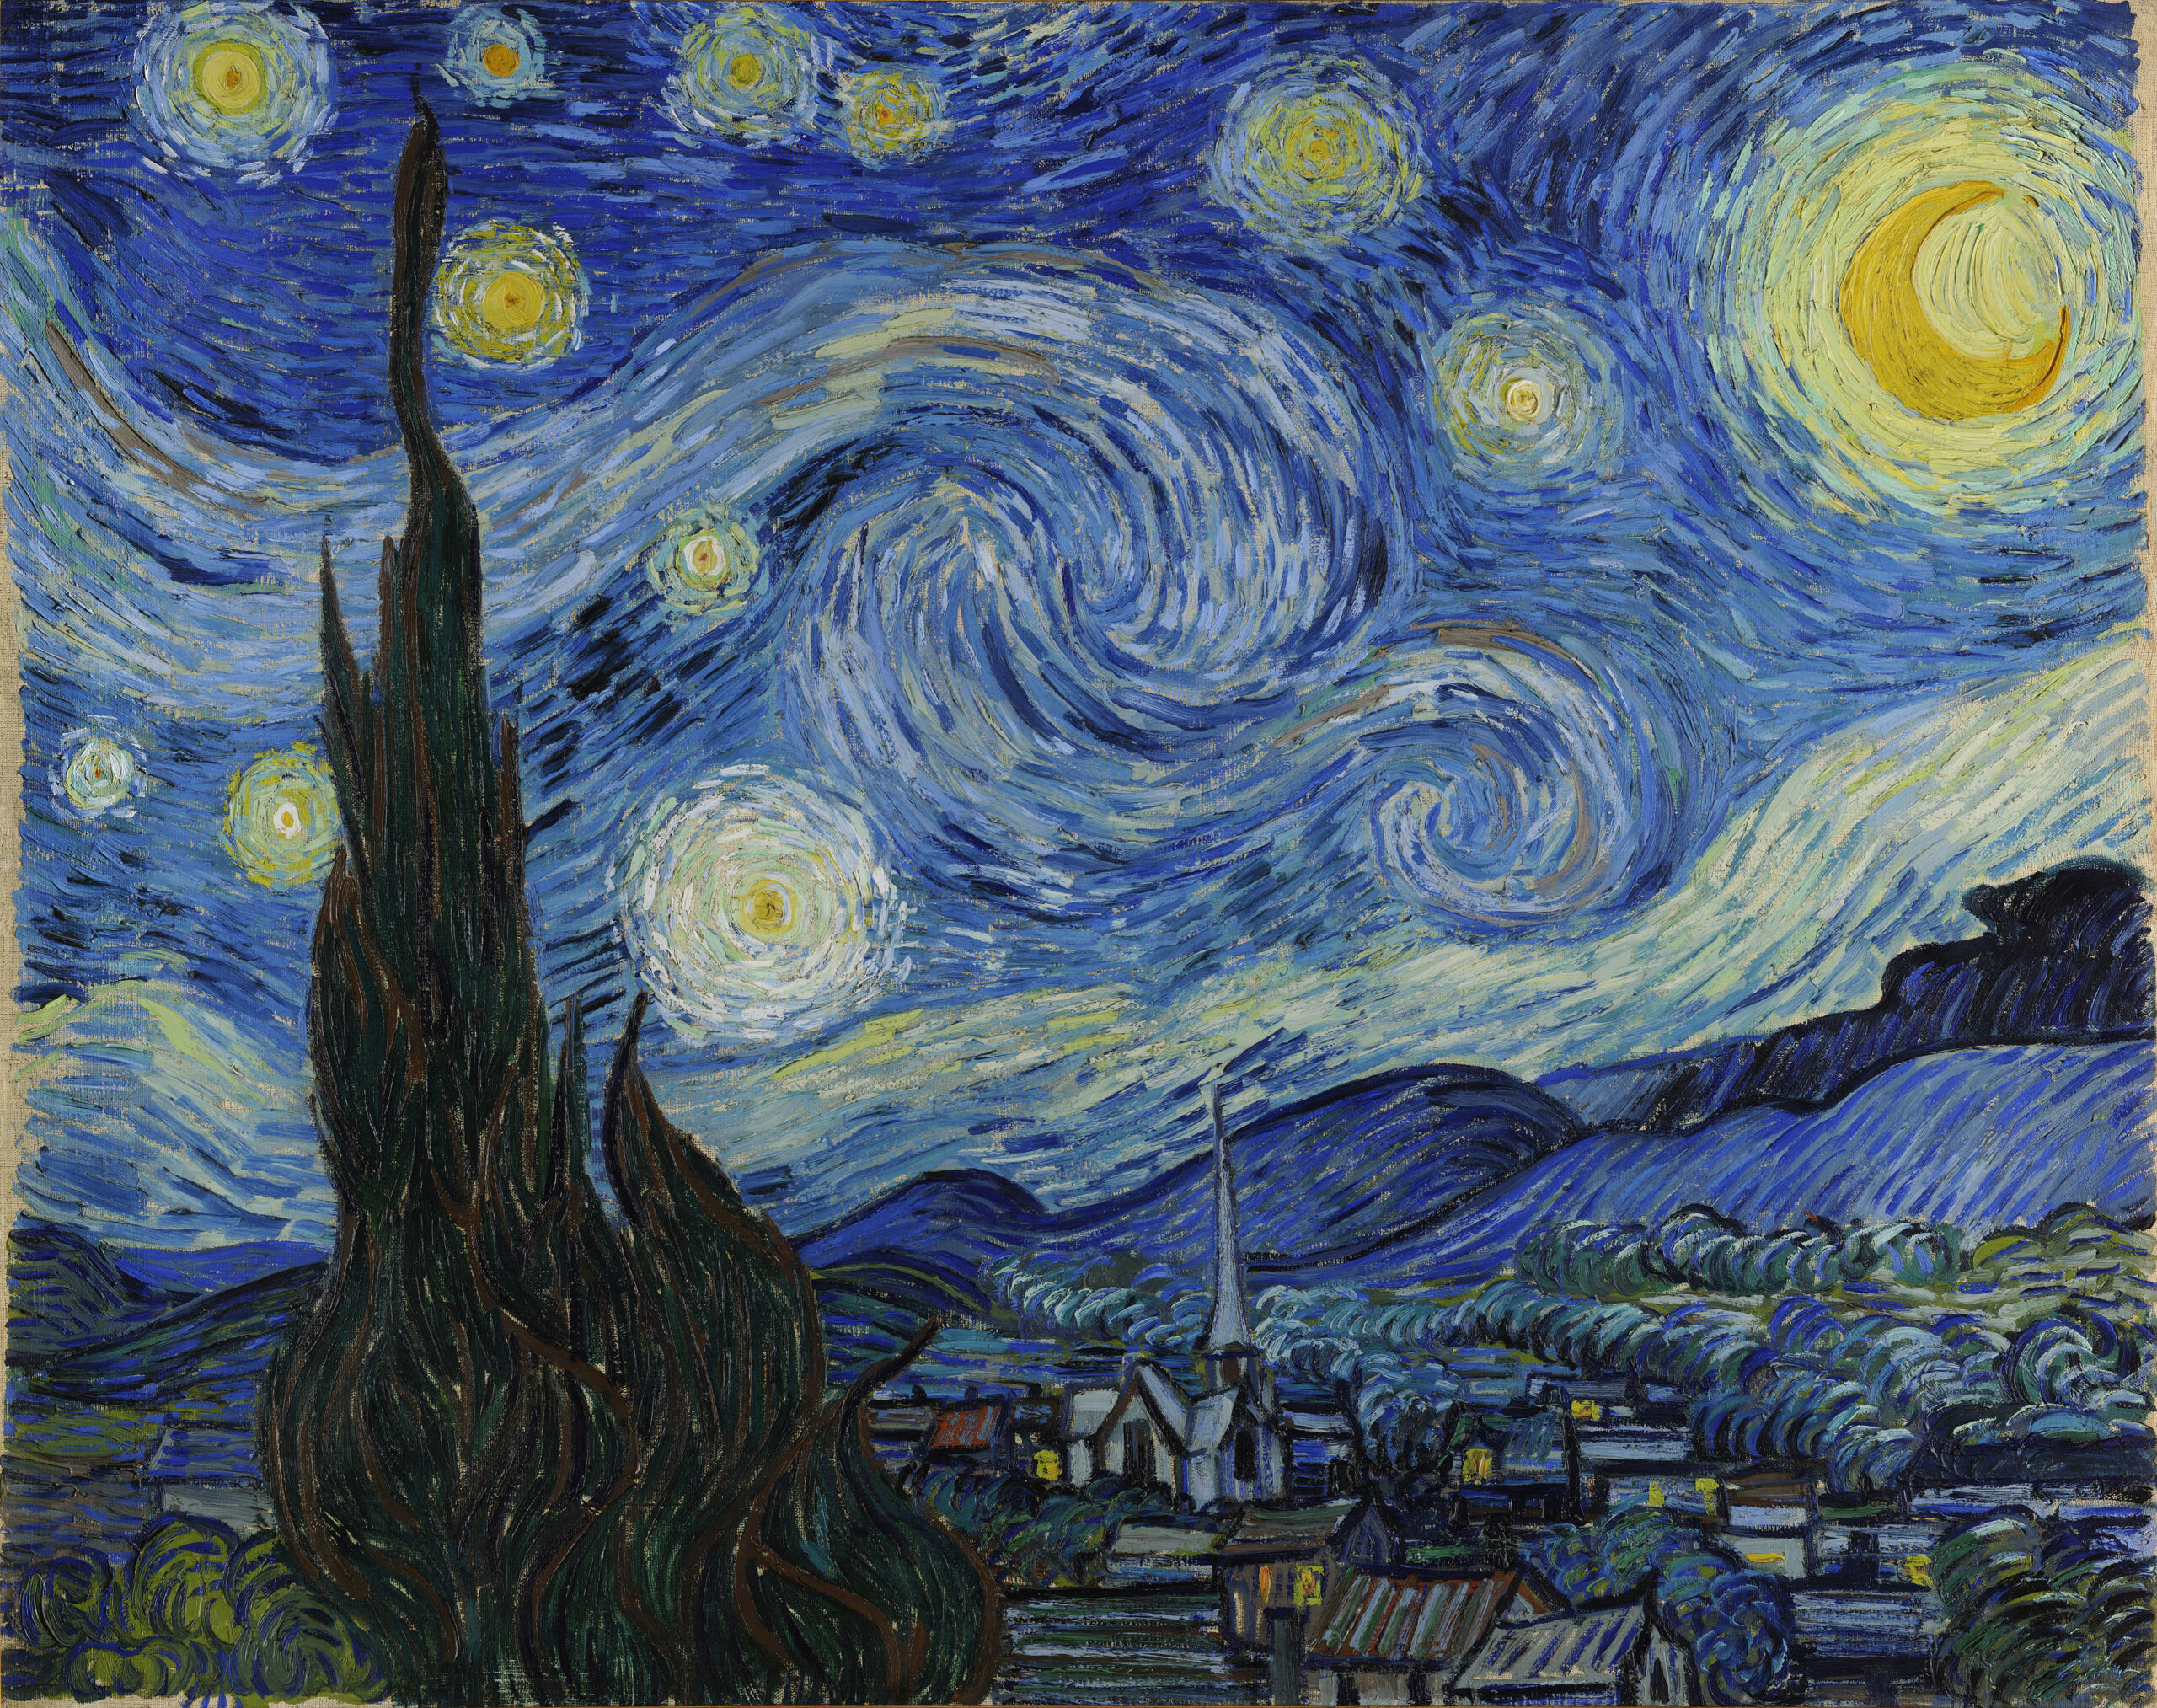 O que significa a obra “Os Girassóis” de Vincent van Gogh?